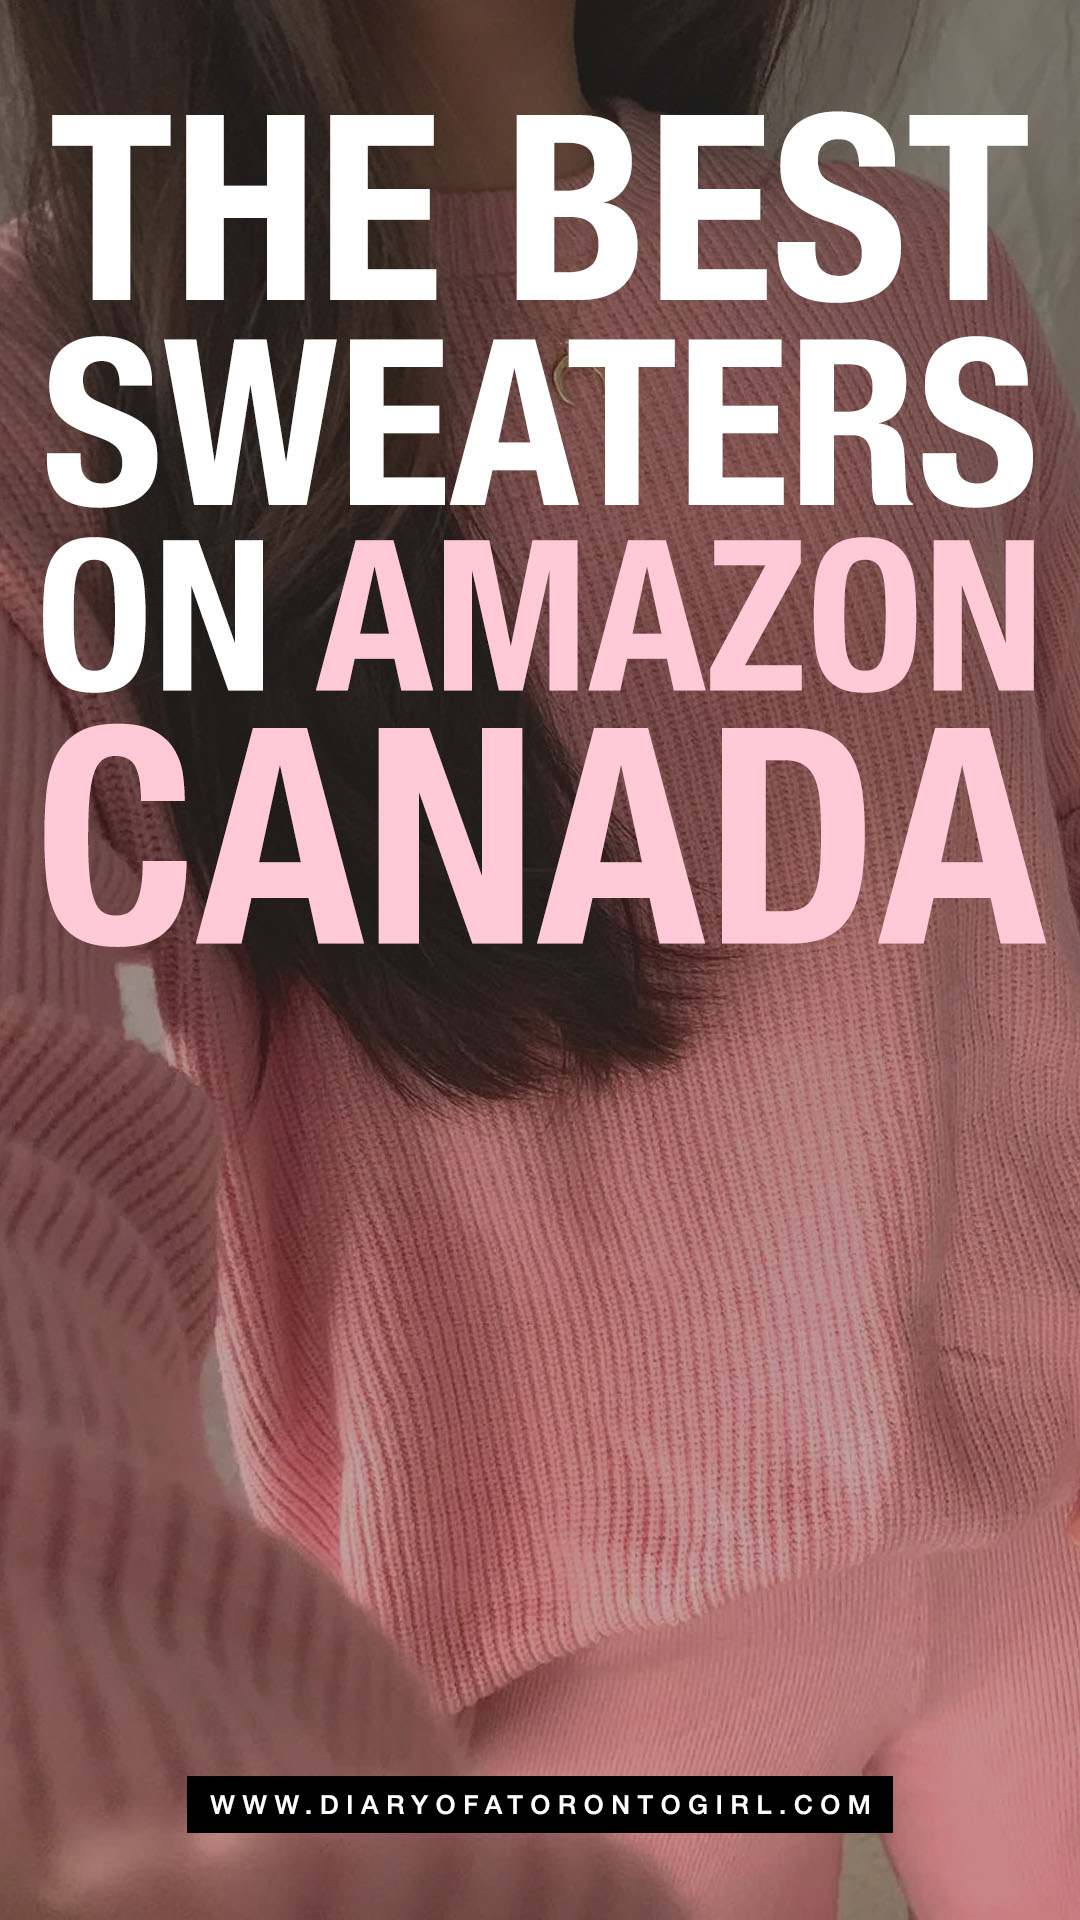 Best sweaters on Amazon Canada